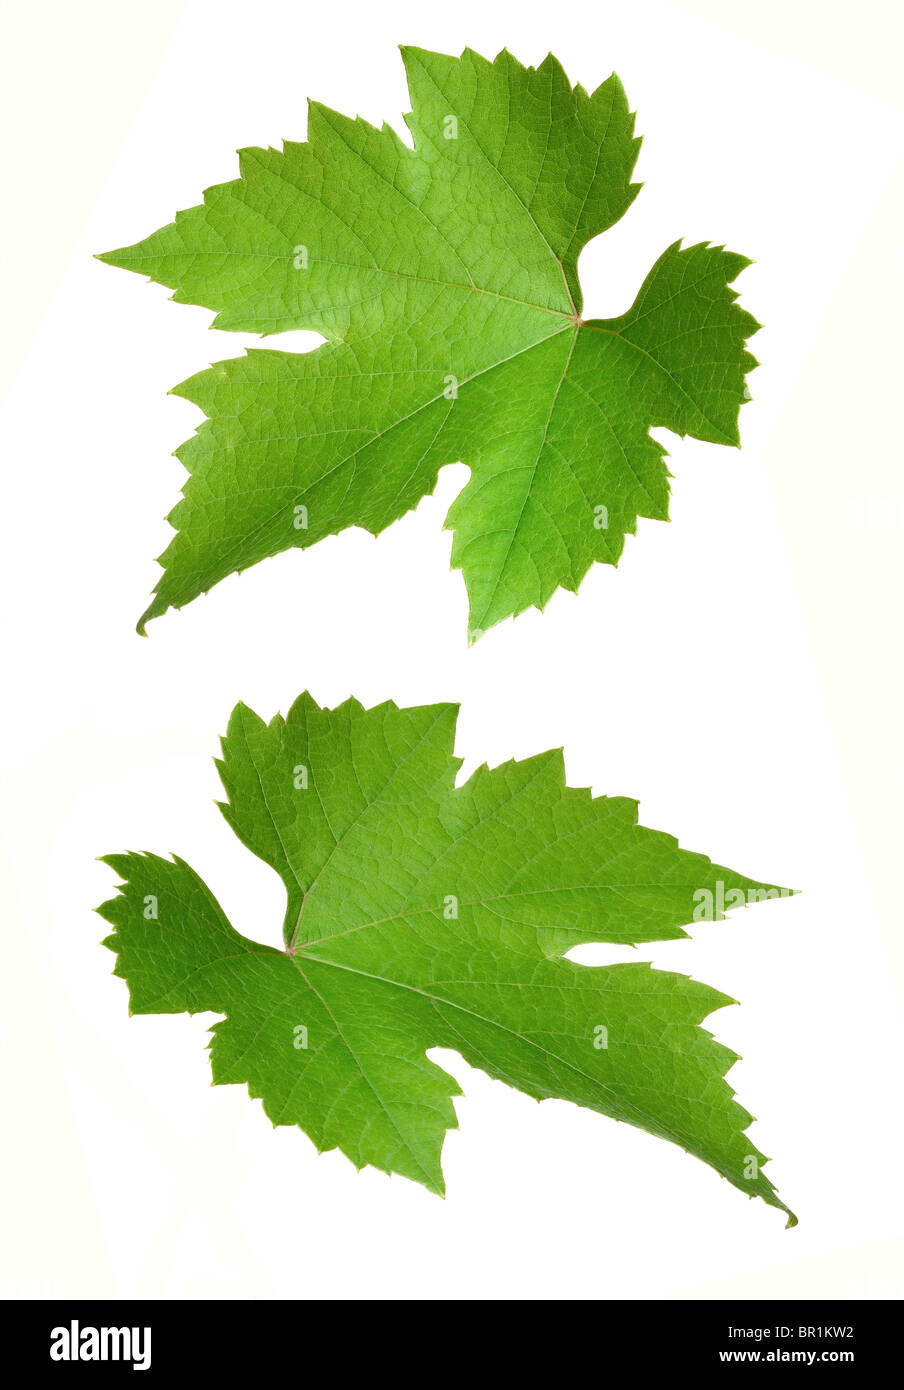 grapevine leaves Stock Photo